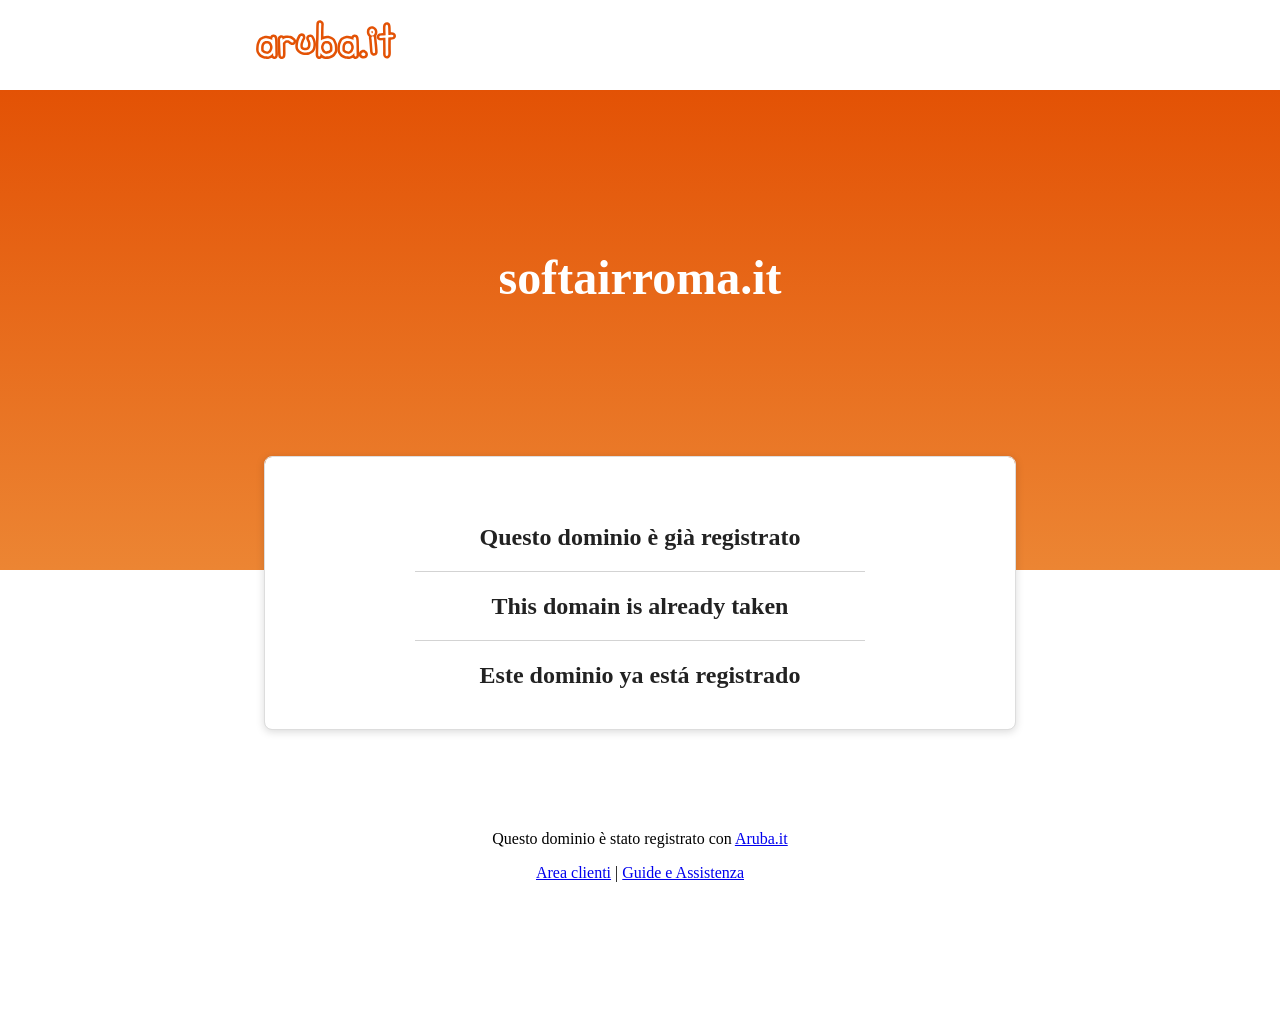 softairroma.it